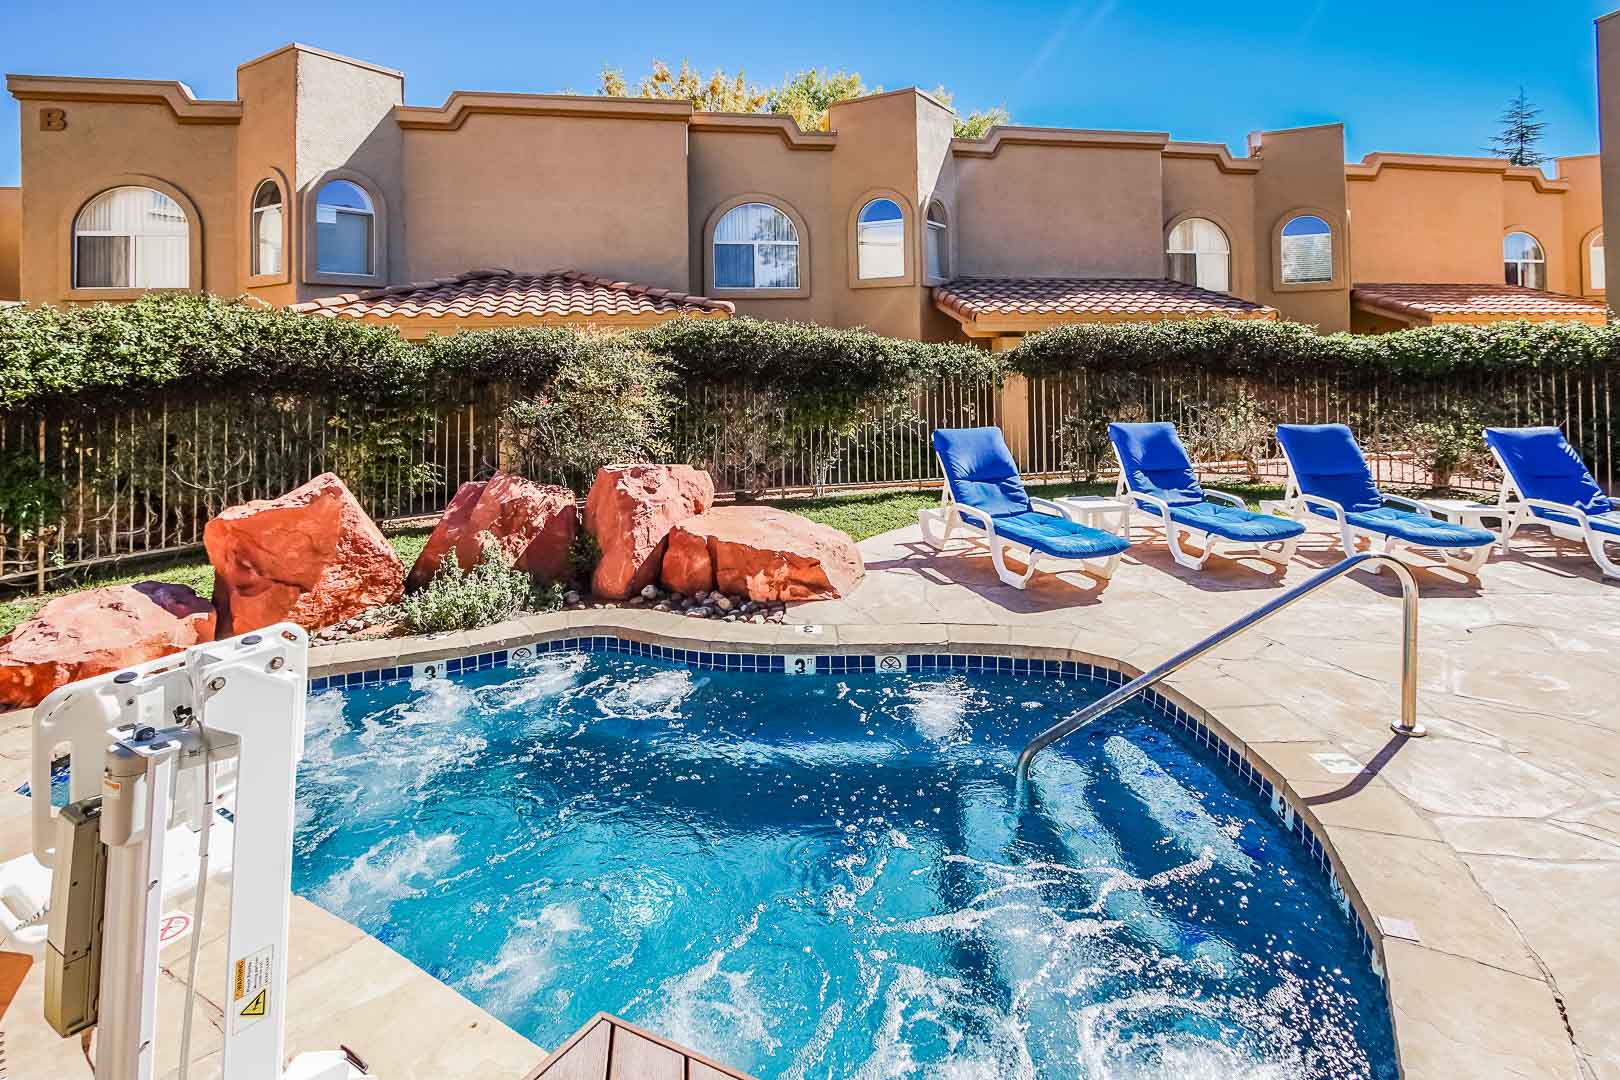 A beautiful outdoor Jacuzzi at VRI's Sedona Springs Resort in Sedona, Arizona.